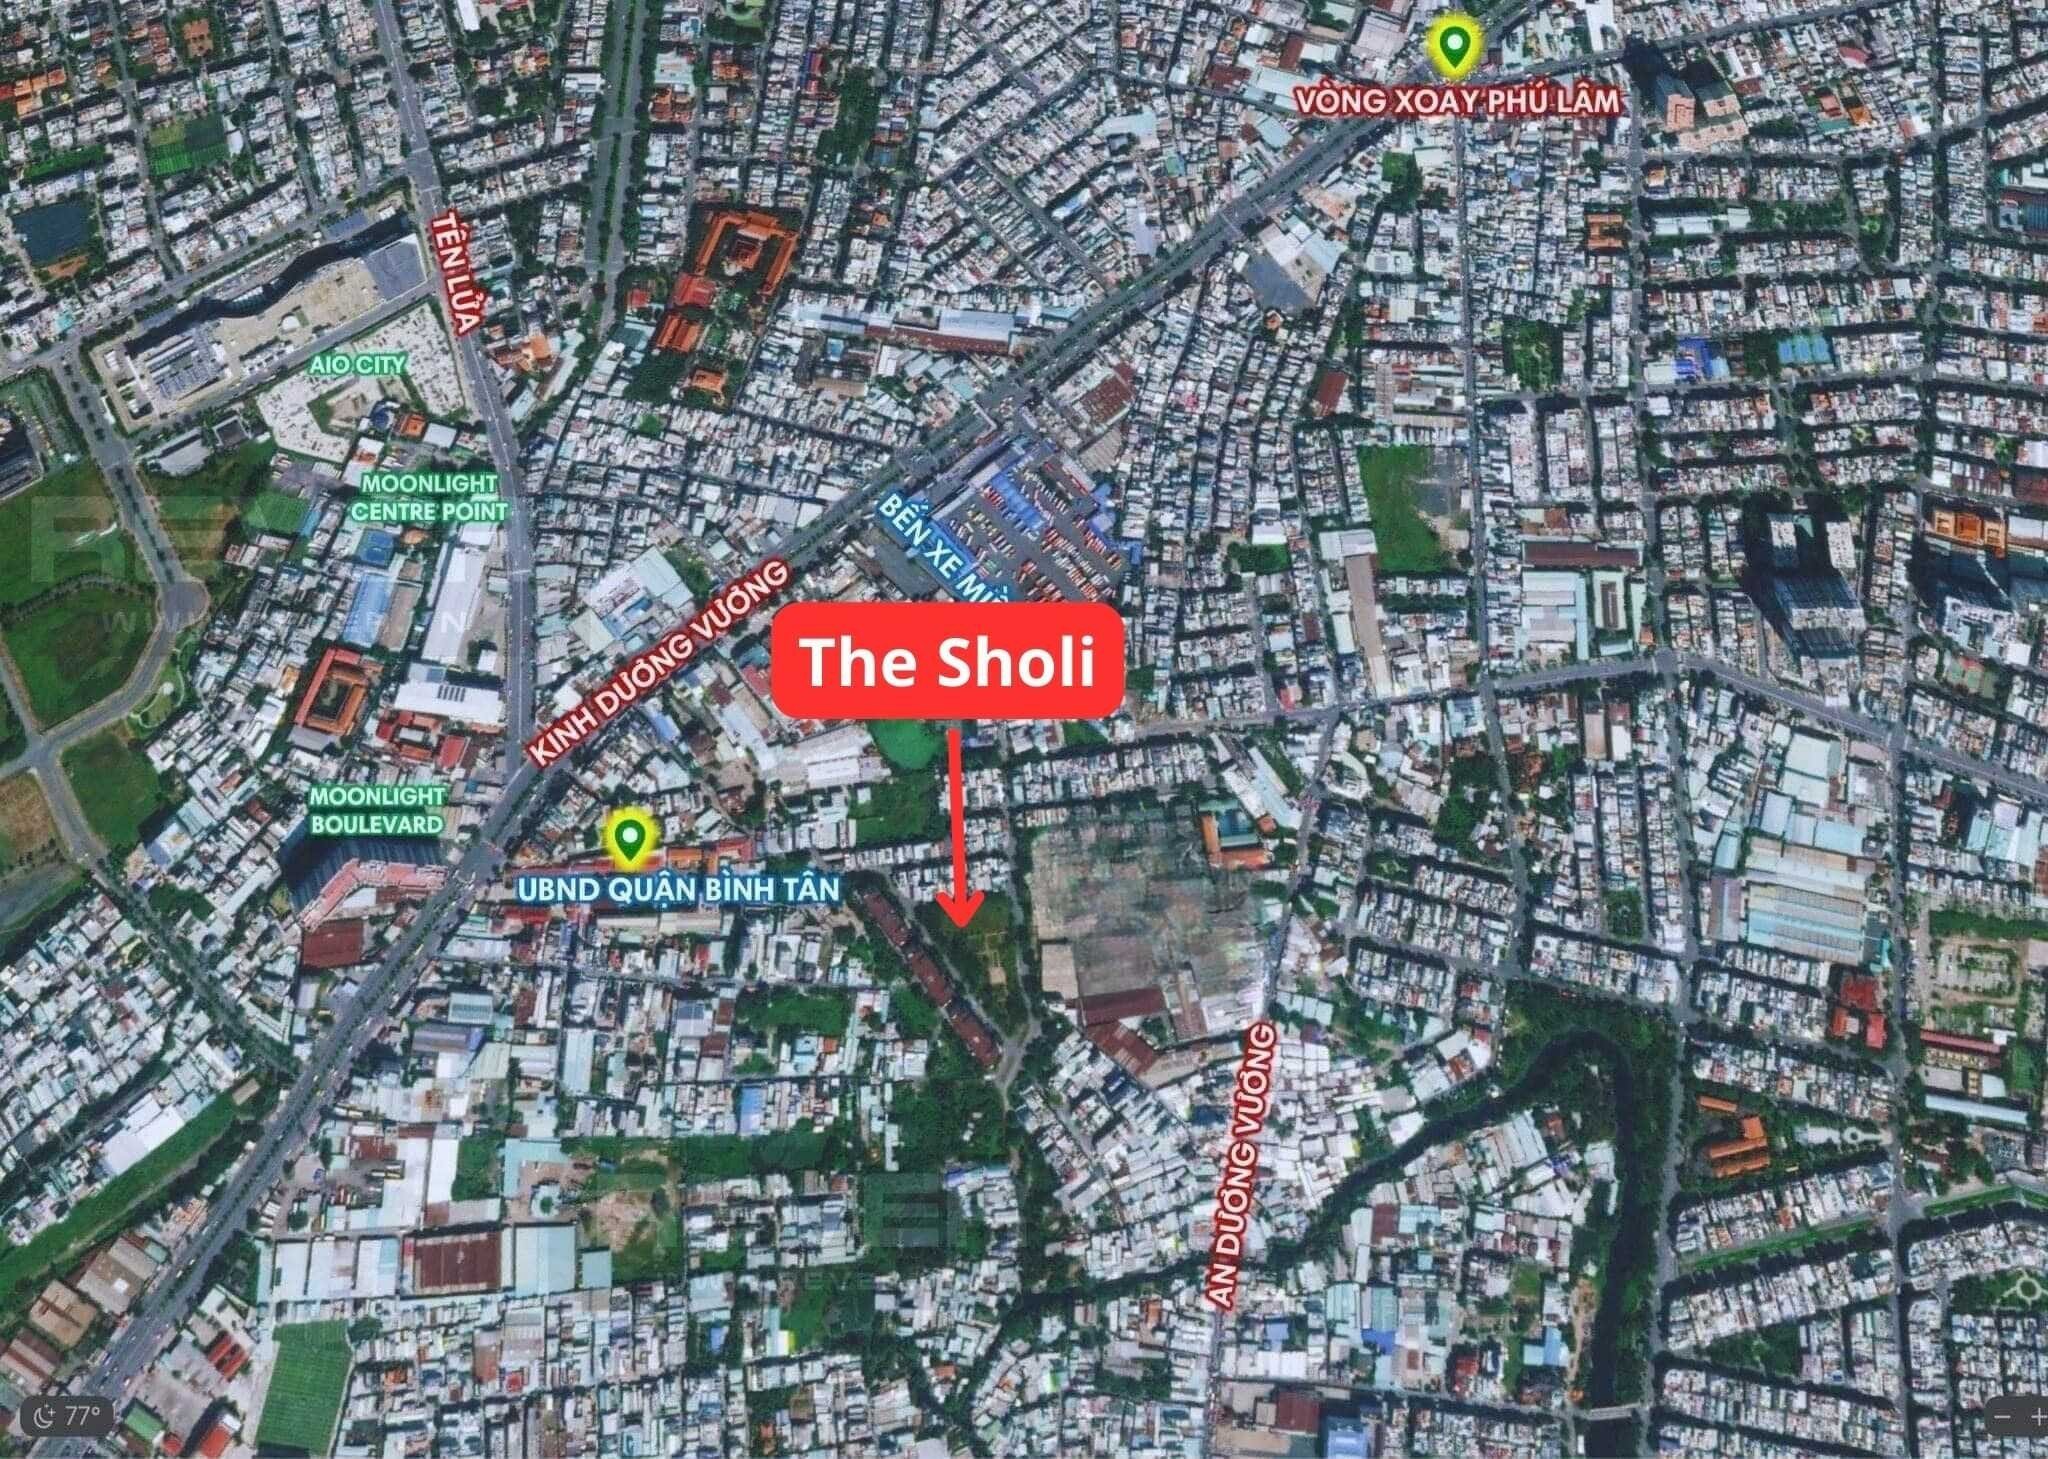 Location The Sholi